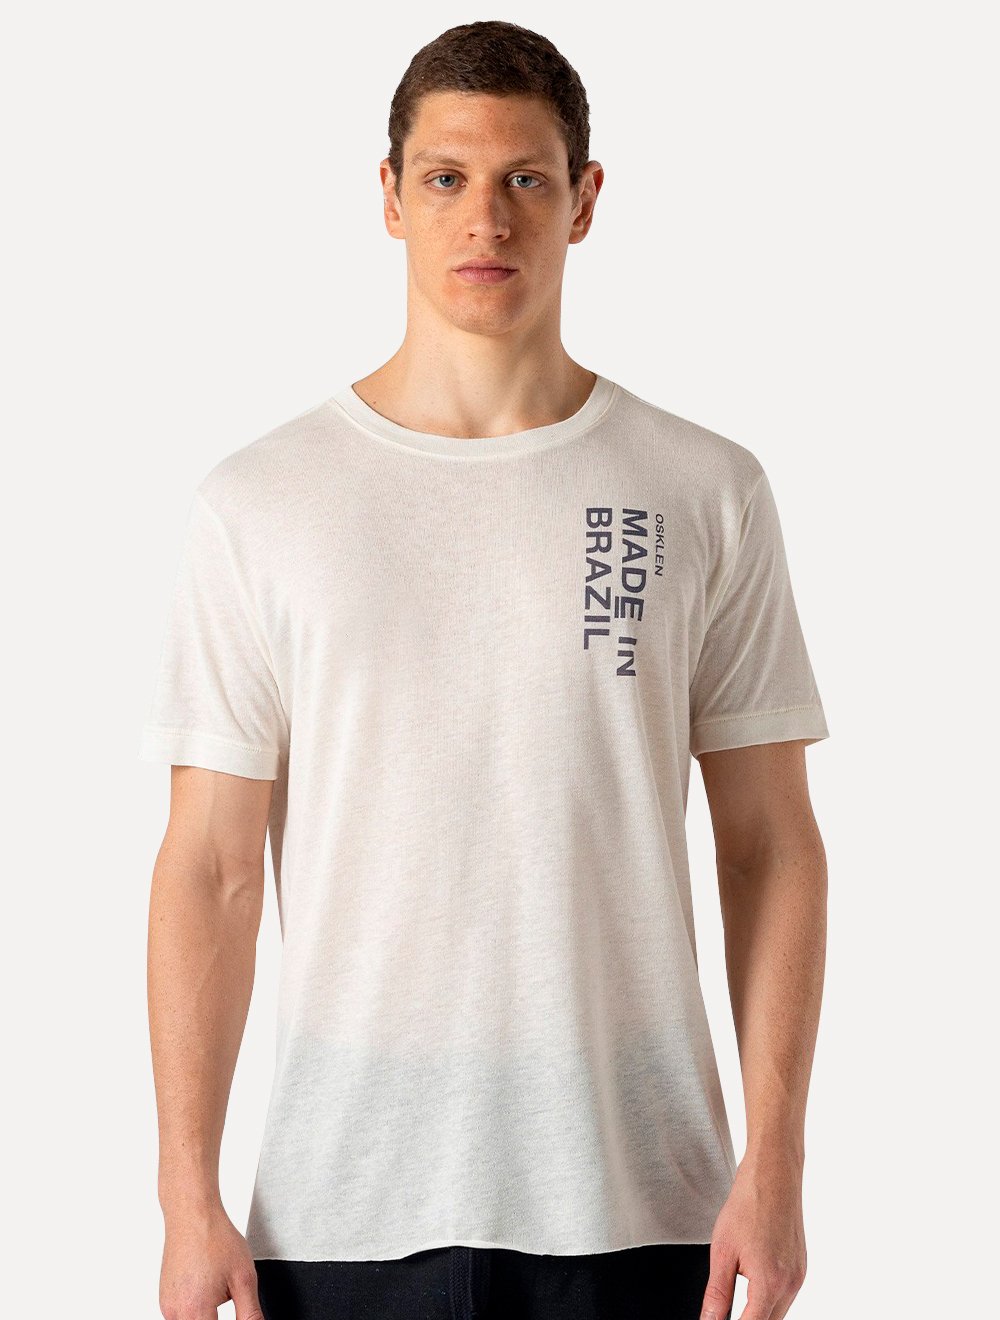 Camiseta Lacoste Masculina Classic Pima Cotton Logo Branca | Secret